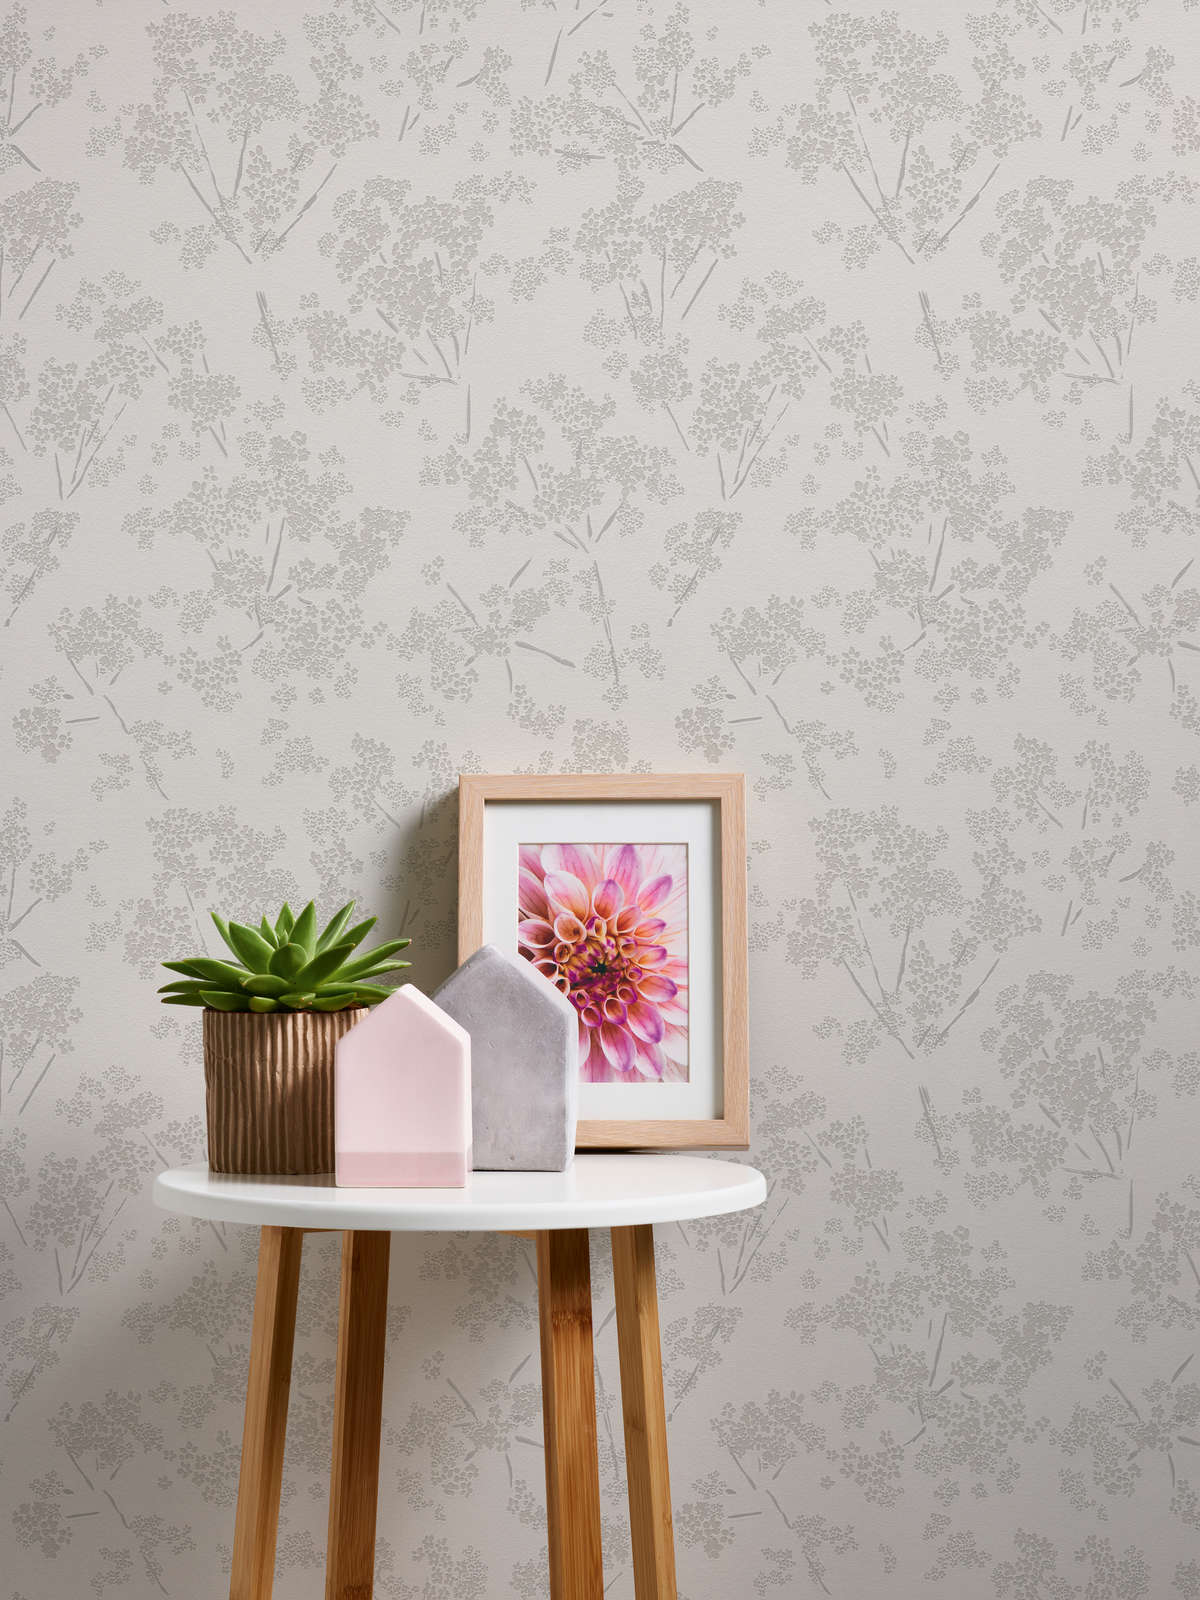             Vliestapete mit floralem Muster – Weiß, Grau
        